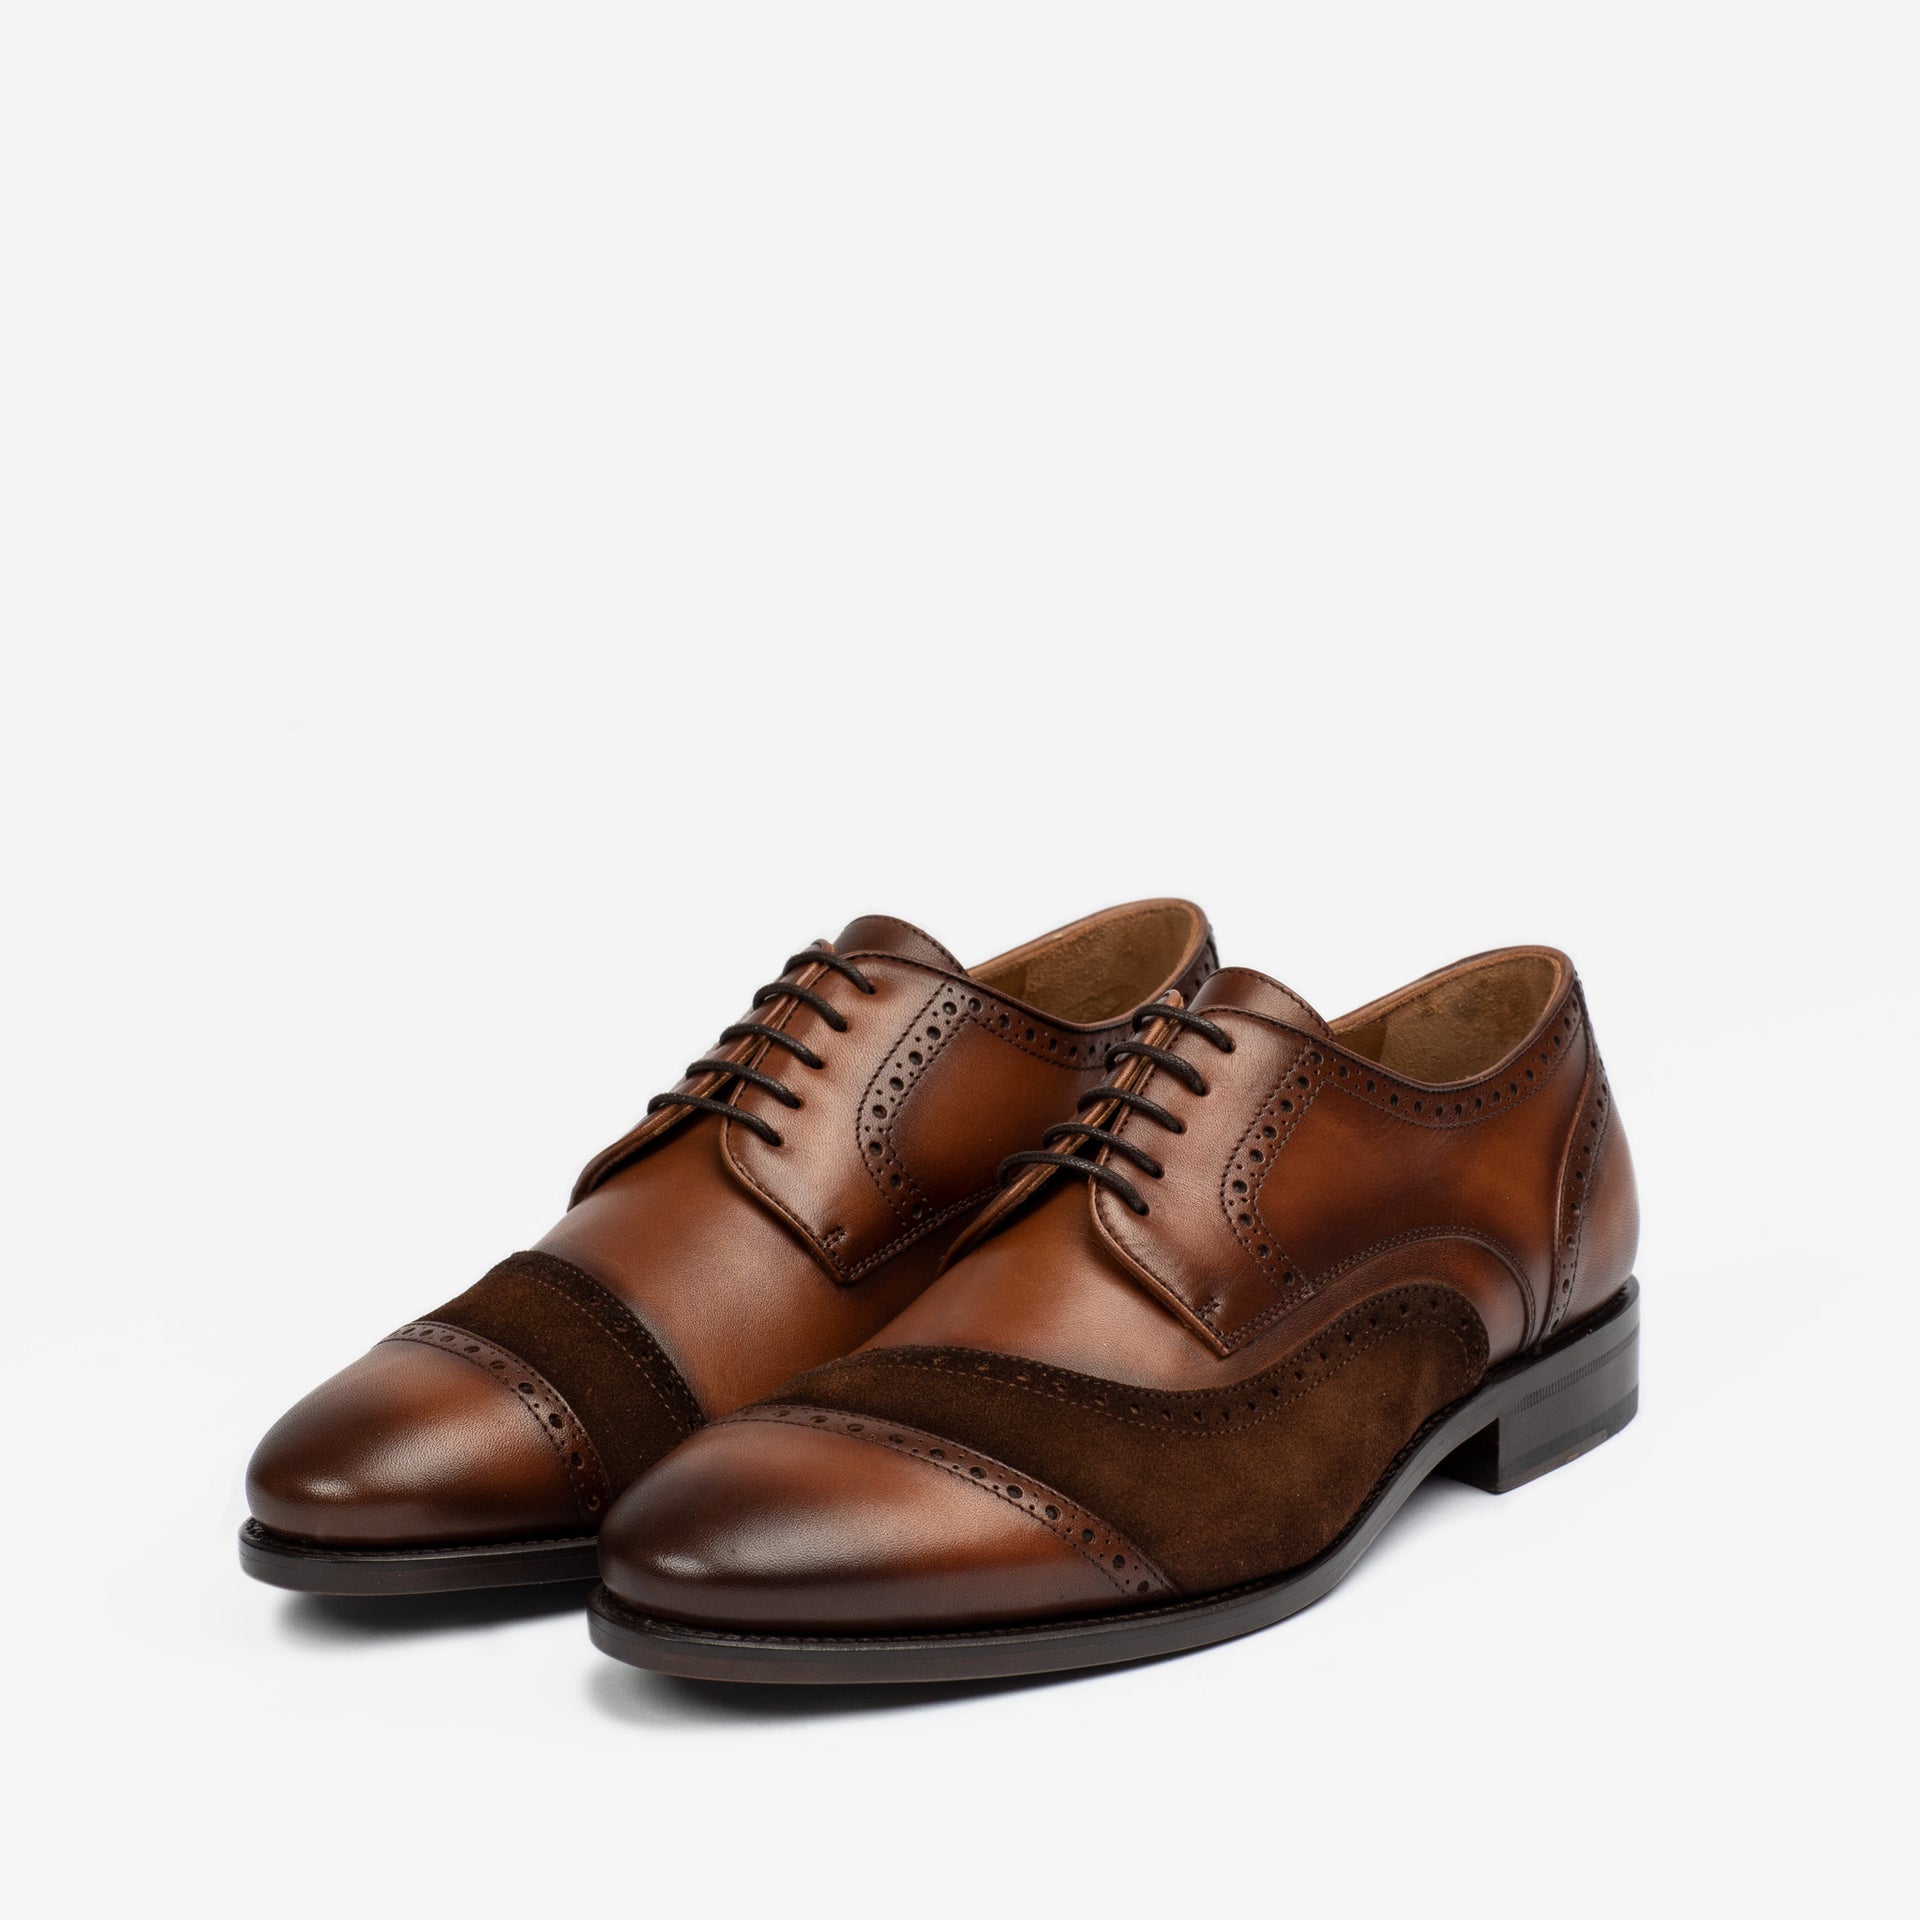 The Gladiator Shoe in Chocolate Brown | TAFT